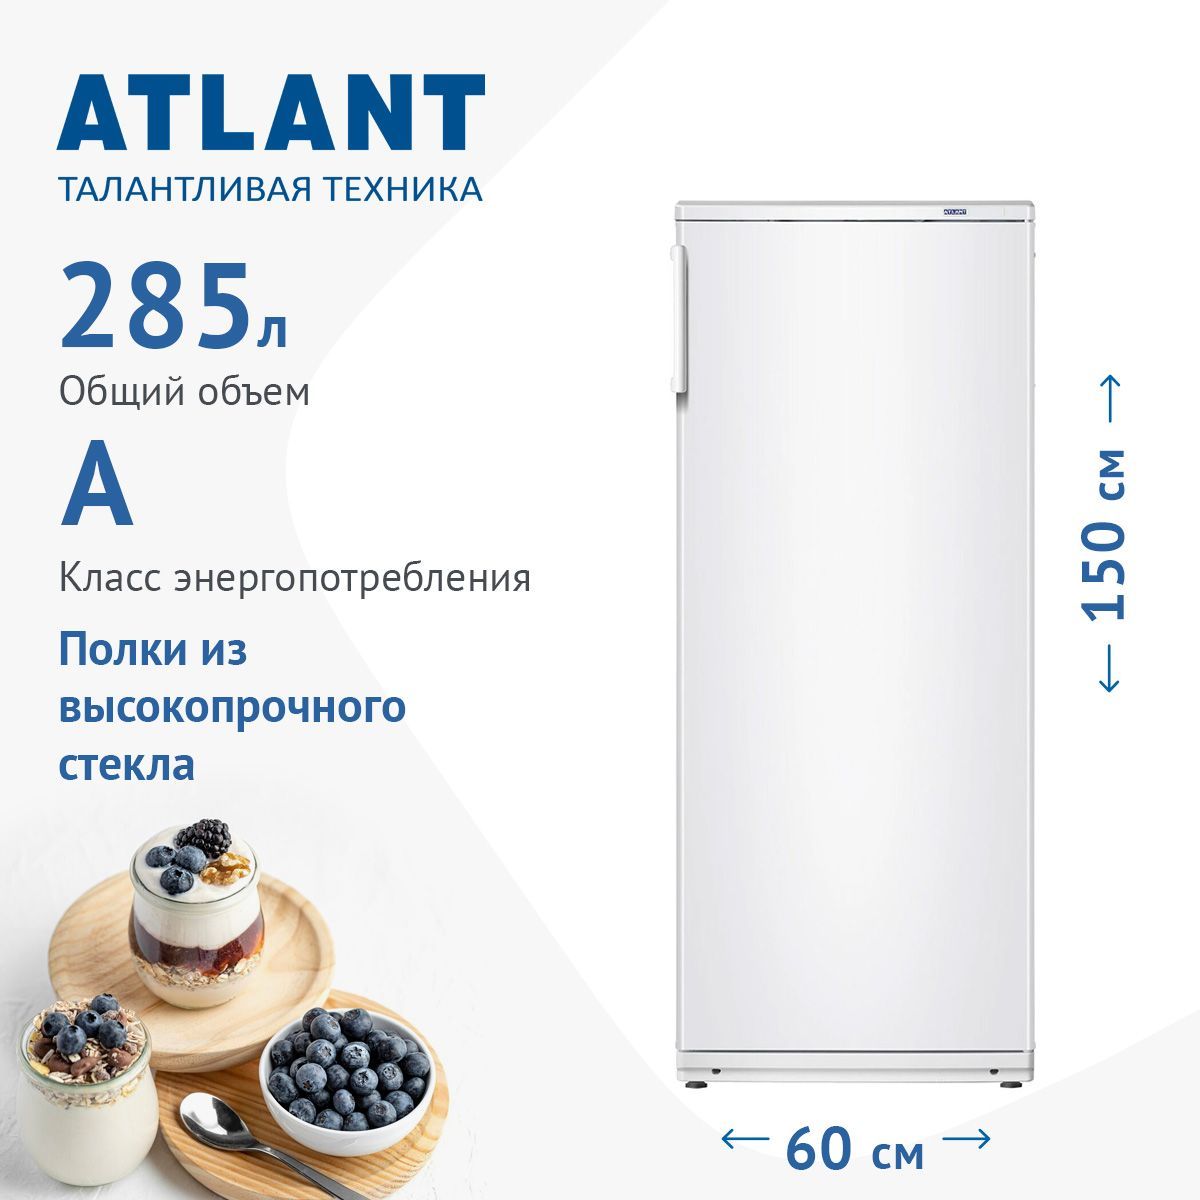 ATLANTХолодильникМХ5810-62,белый